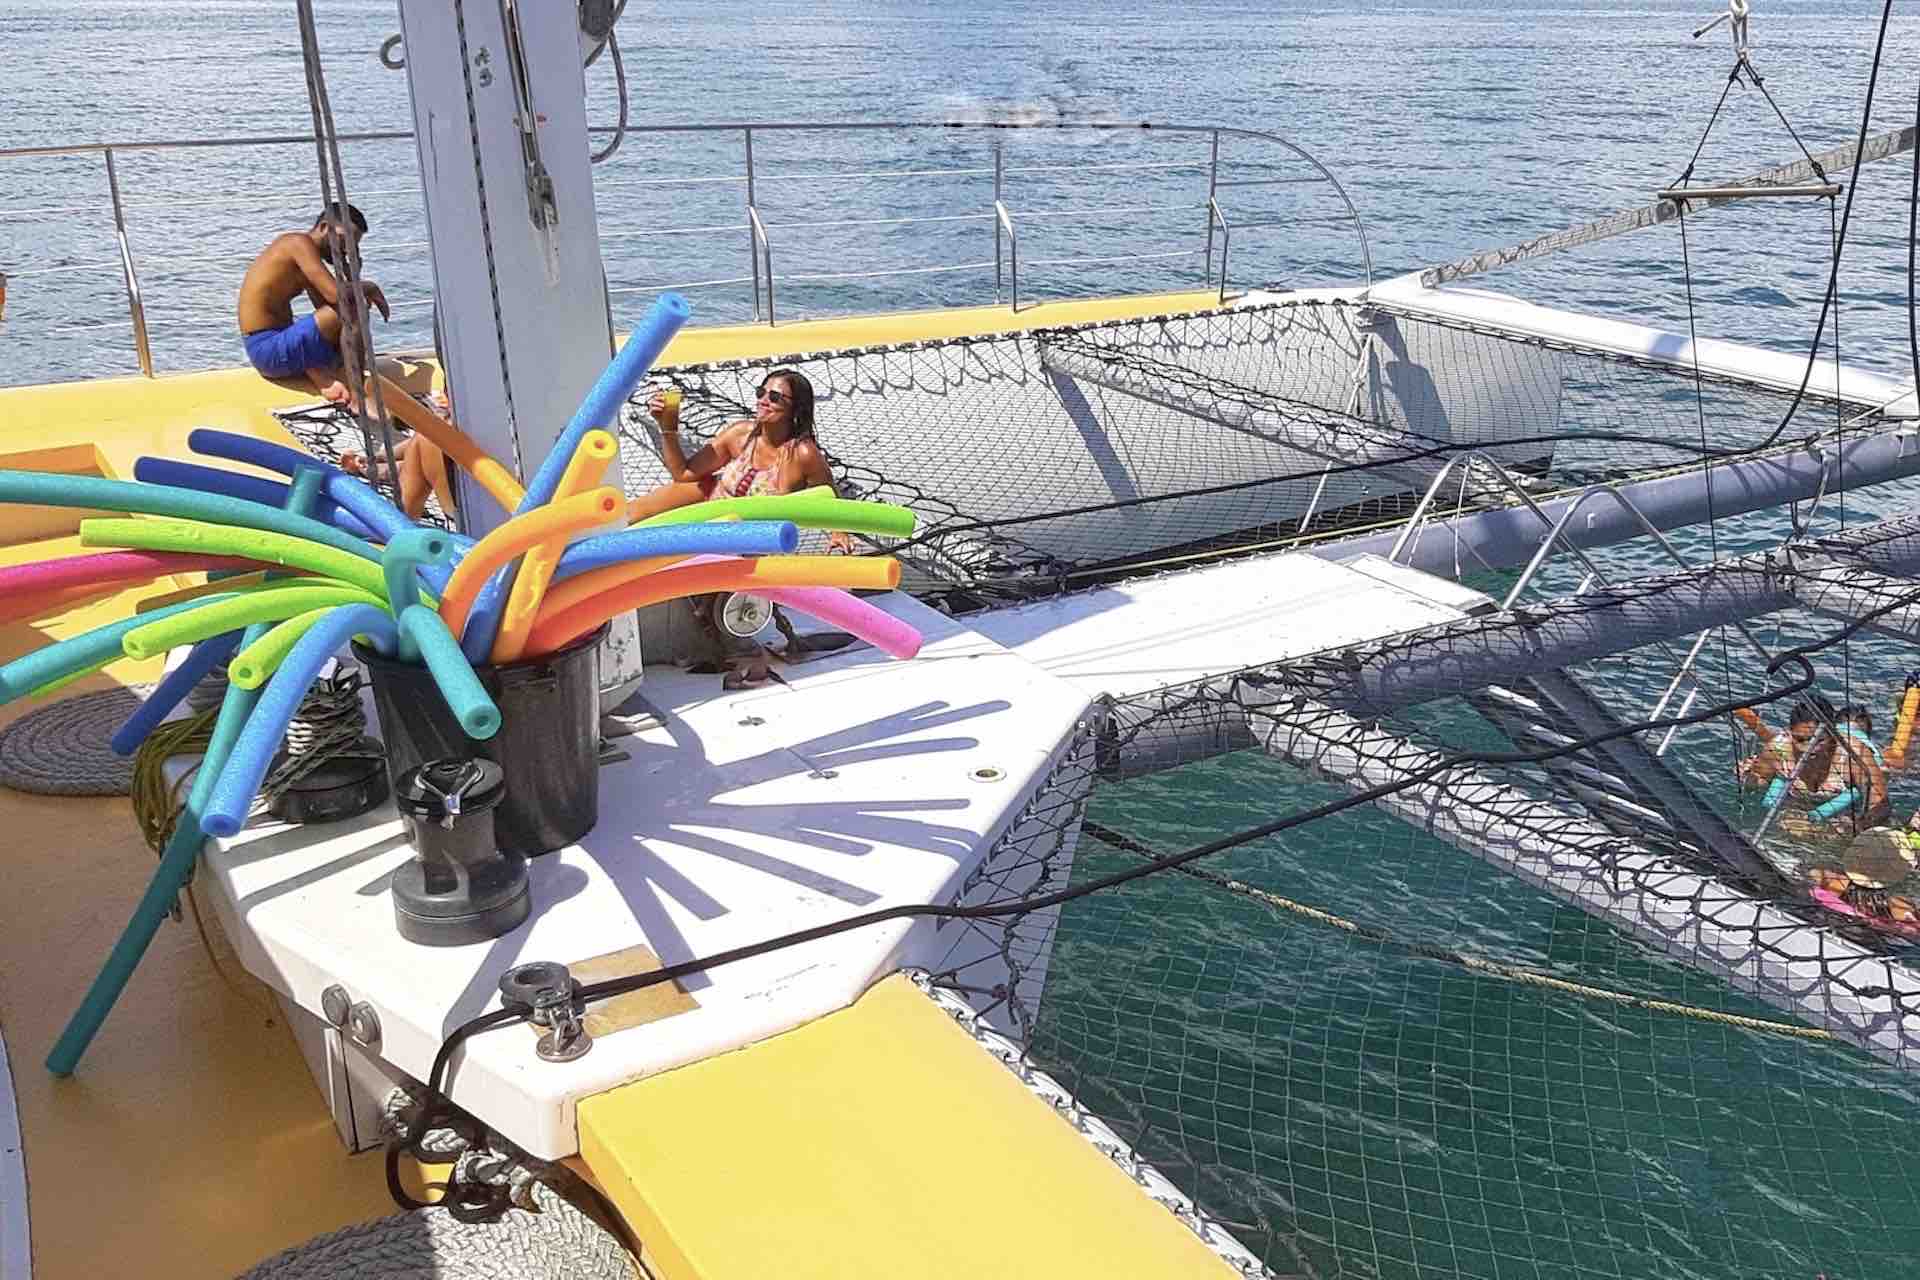 Manga Taboga island sailboat charter guests net hammock swimming noodles